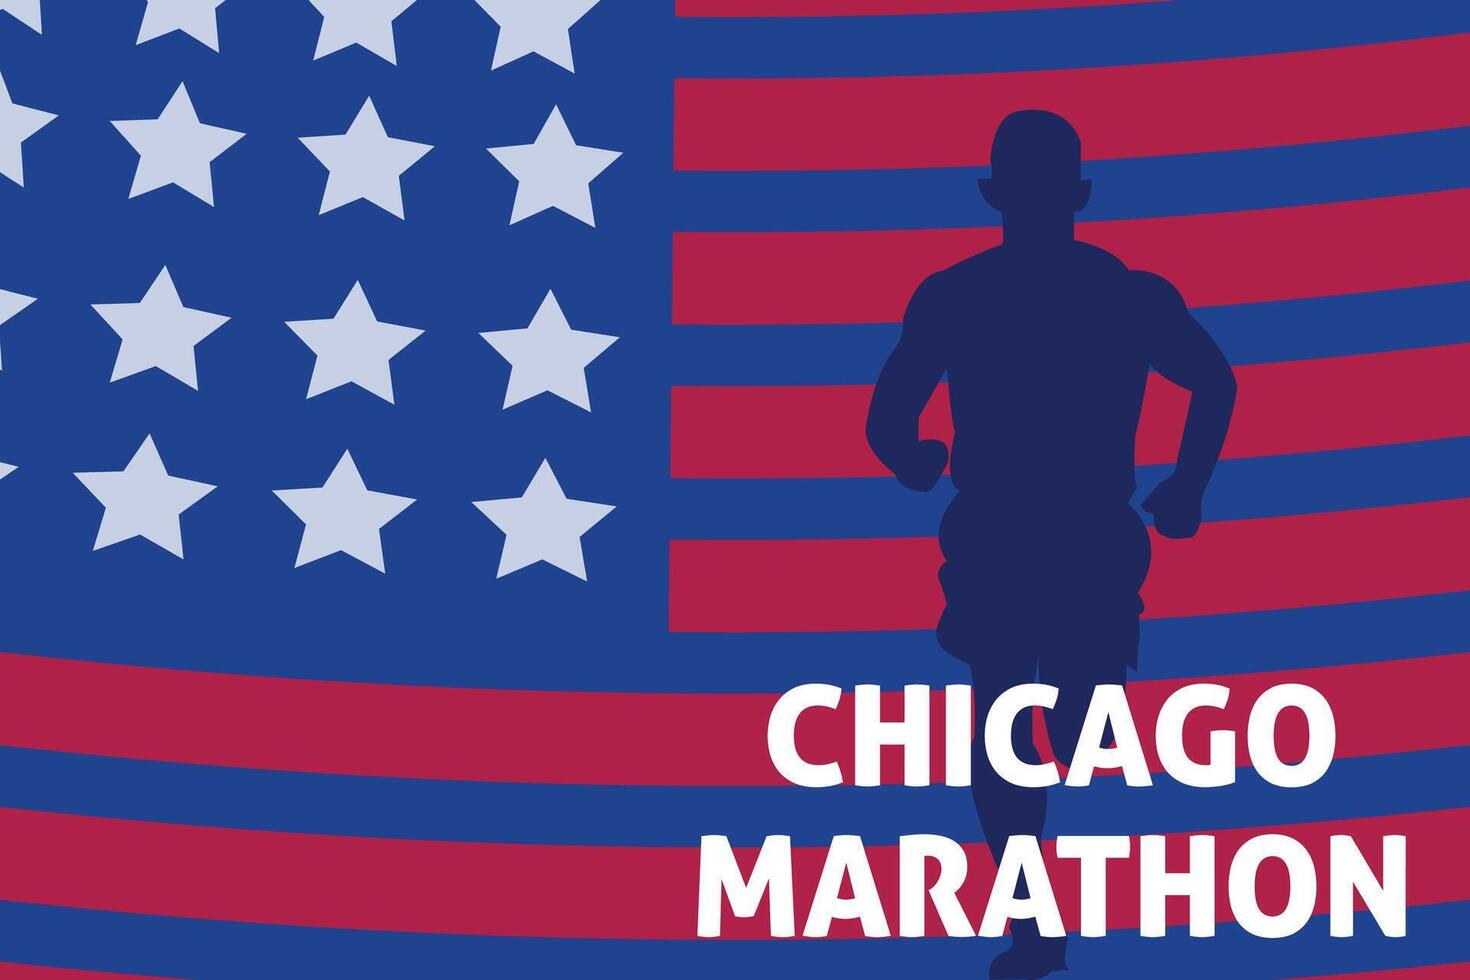 Chicago marathon event background concept. Vector illustration.